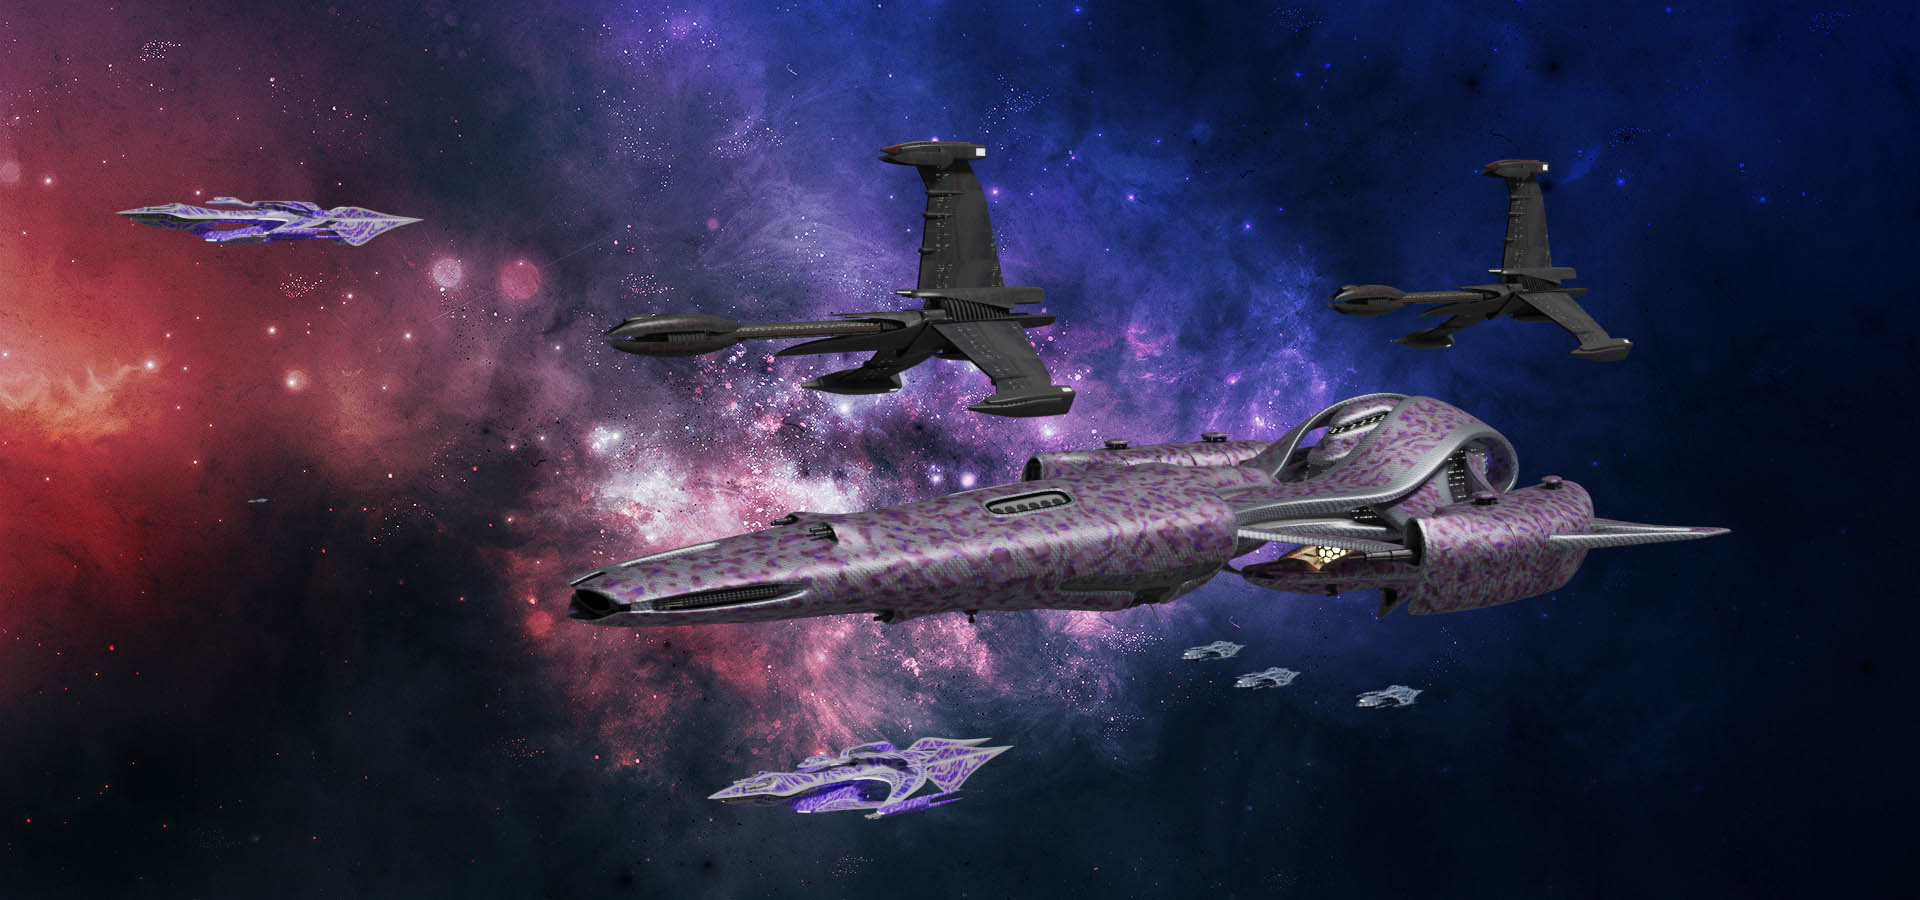 Interstellar Alliance fleet